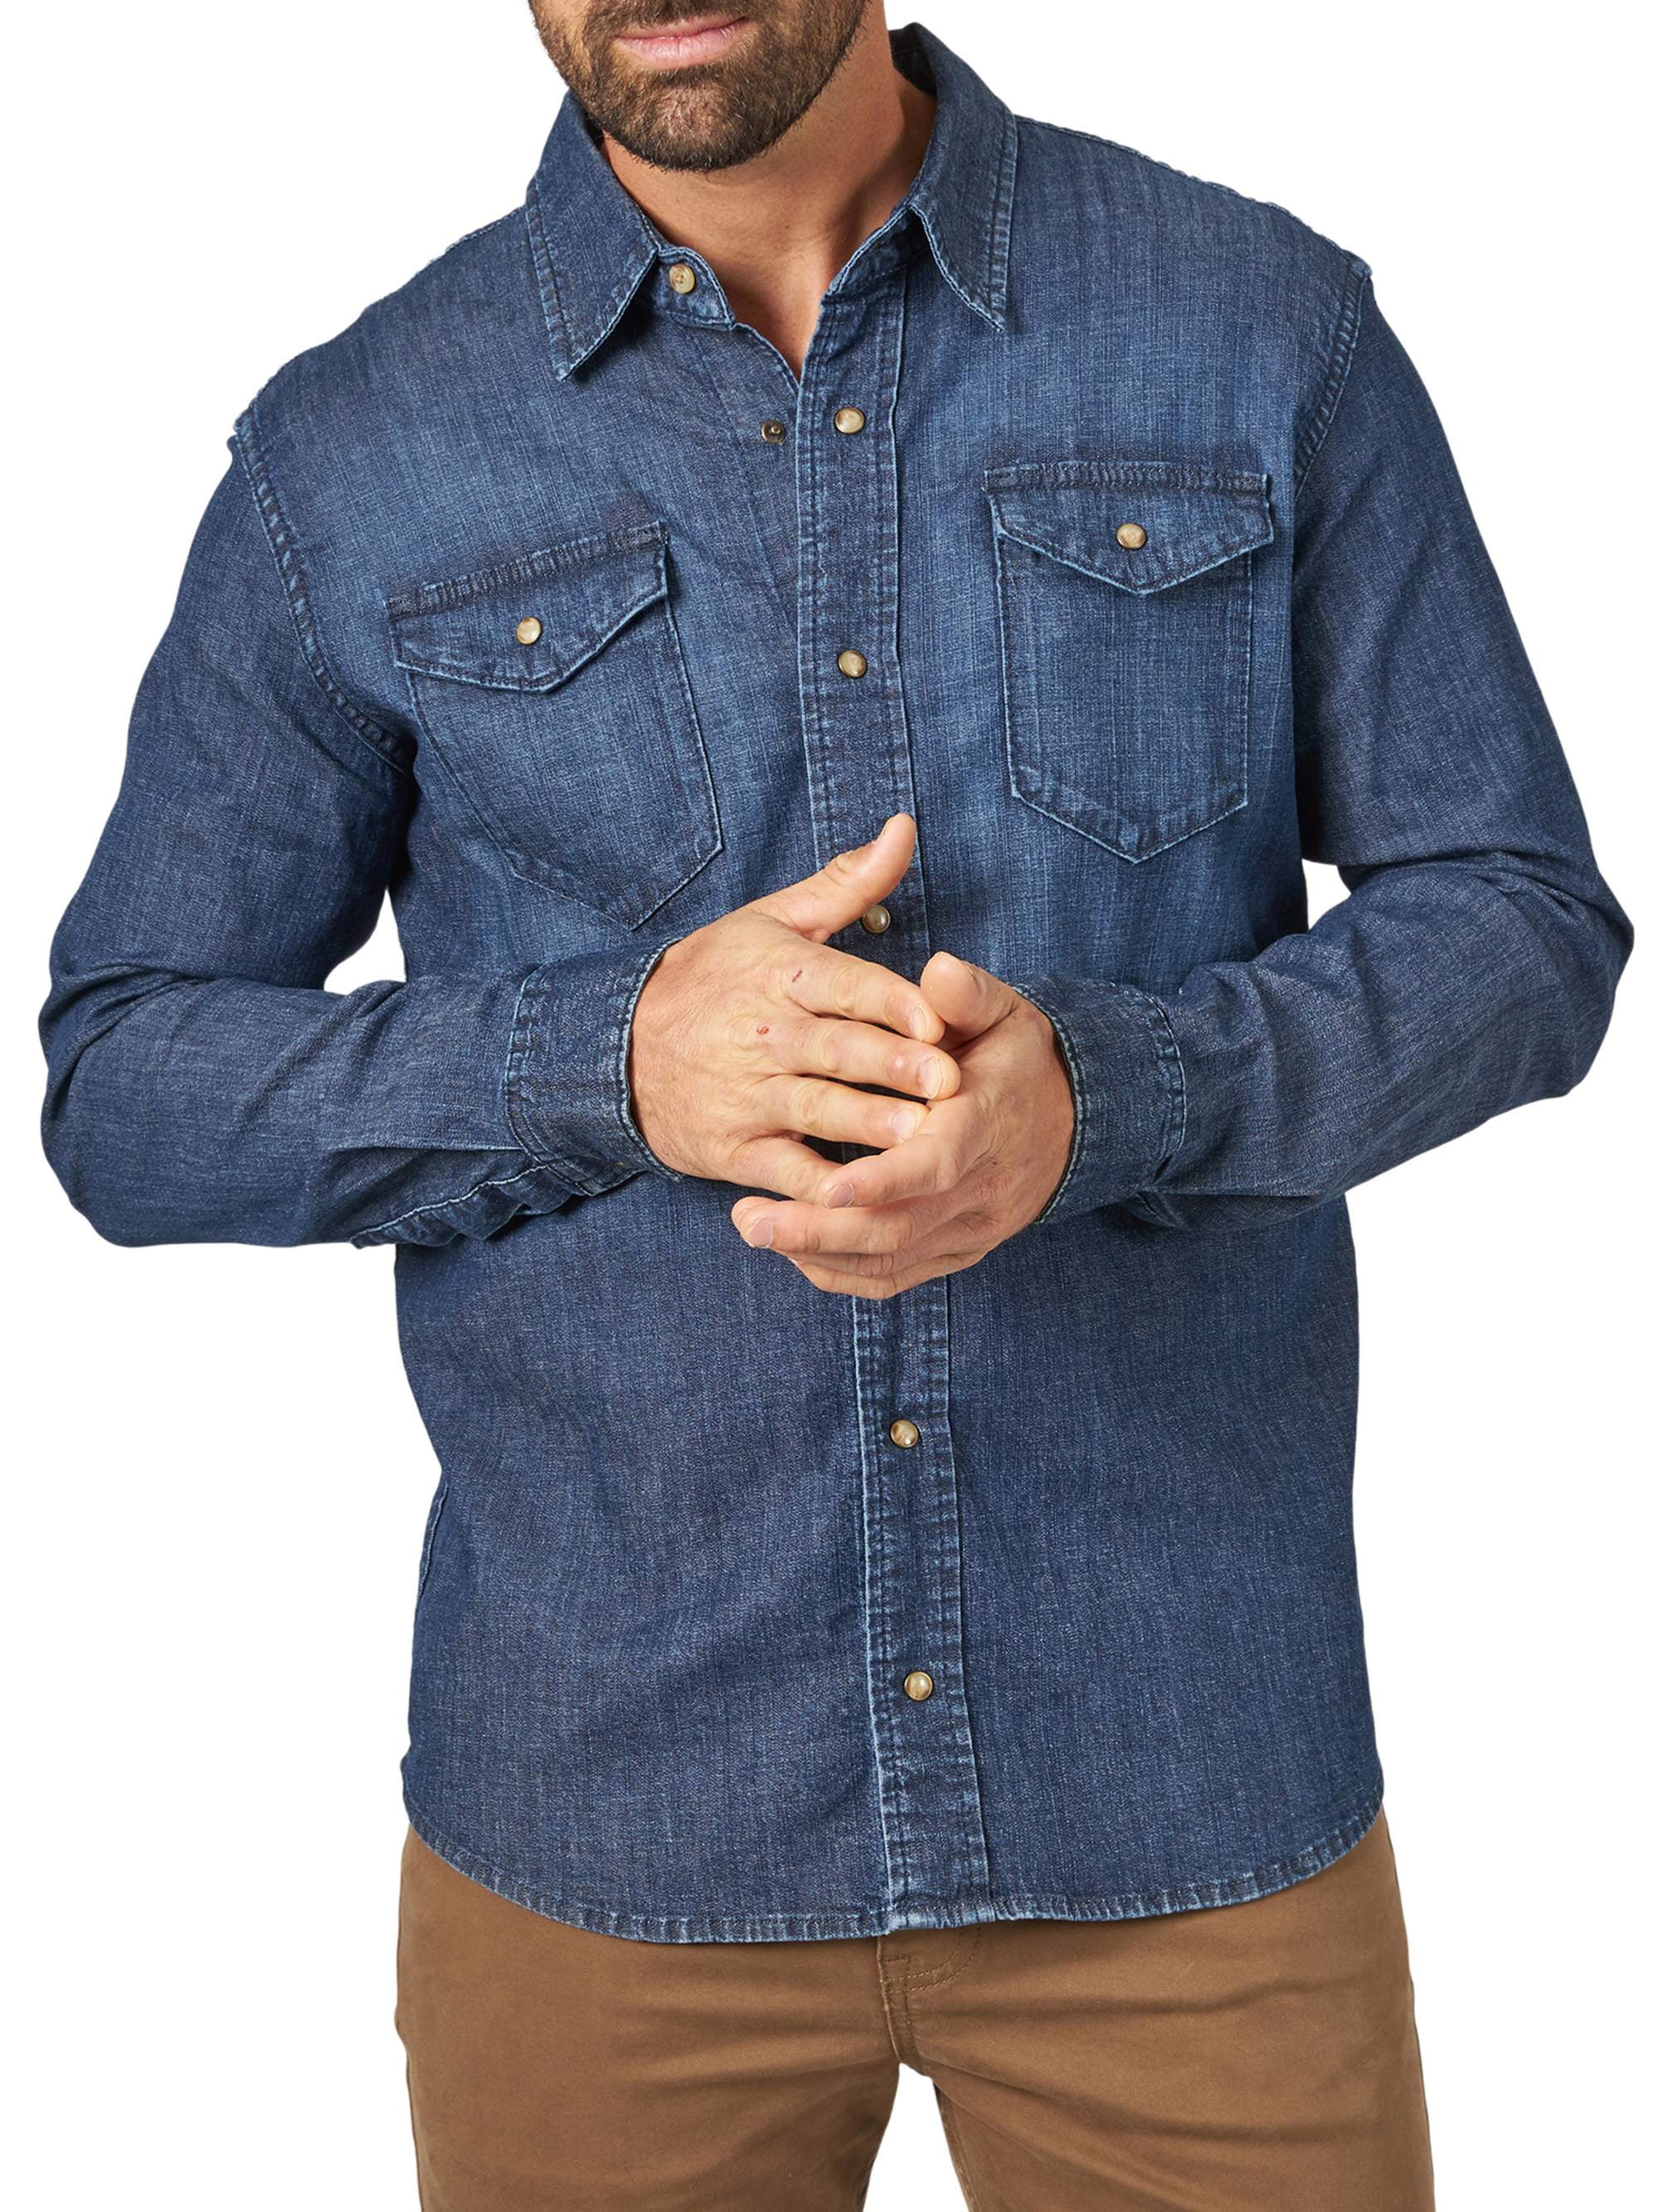 Wrangler Men's Premium Slim Fit Denim Shirt - Walmart.com